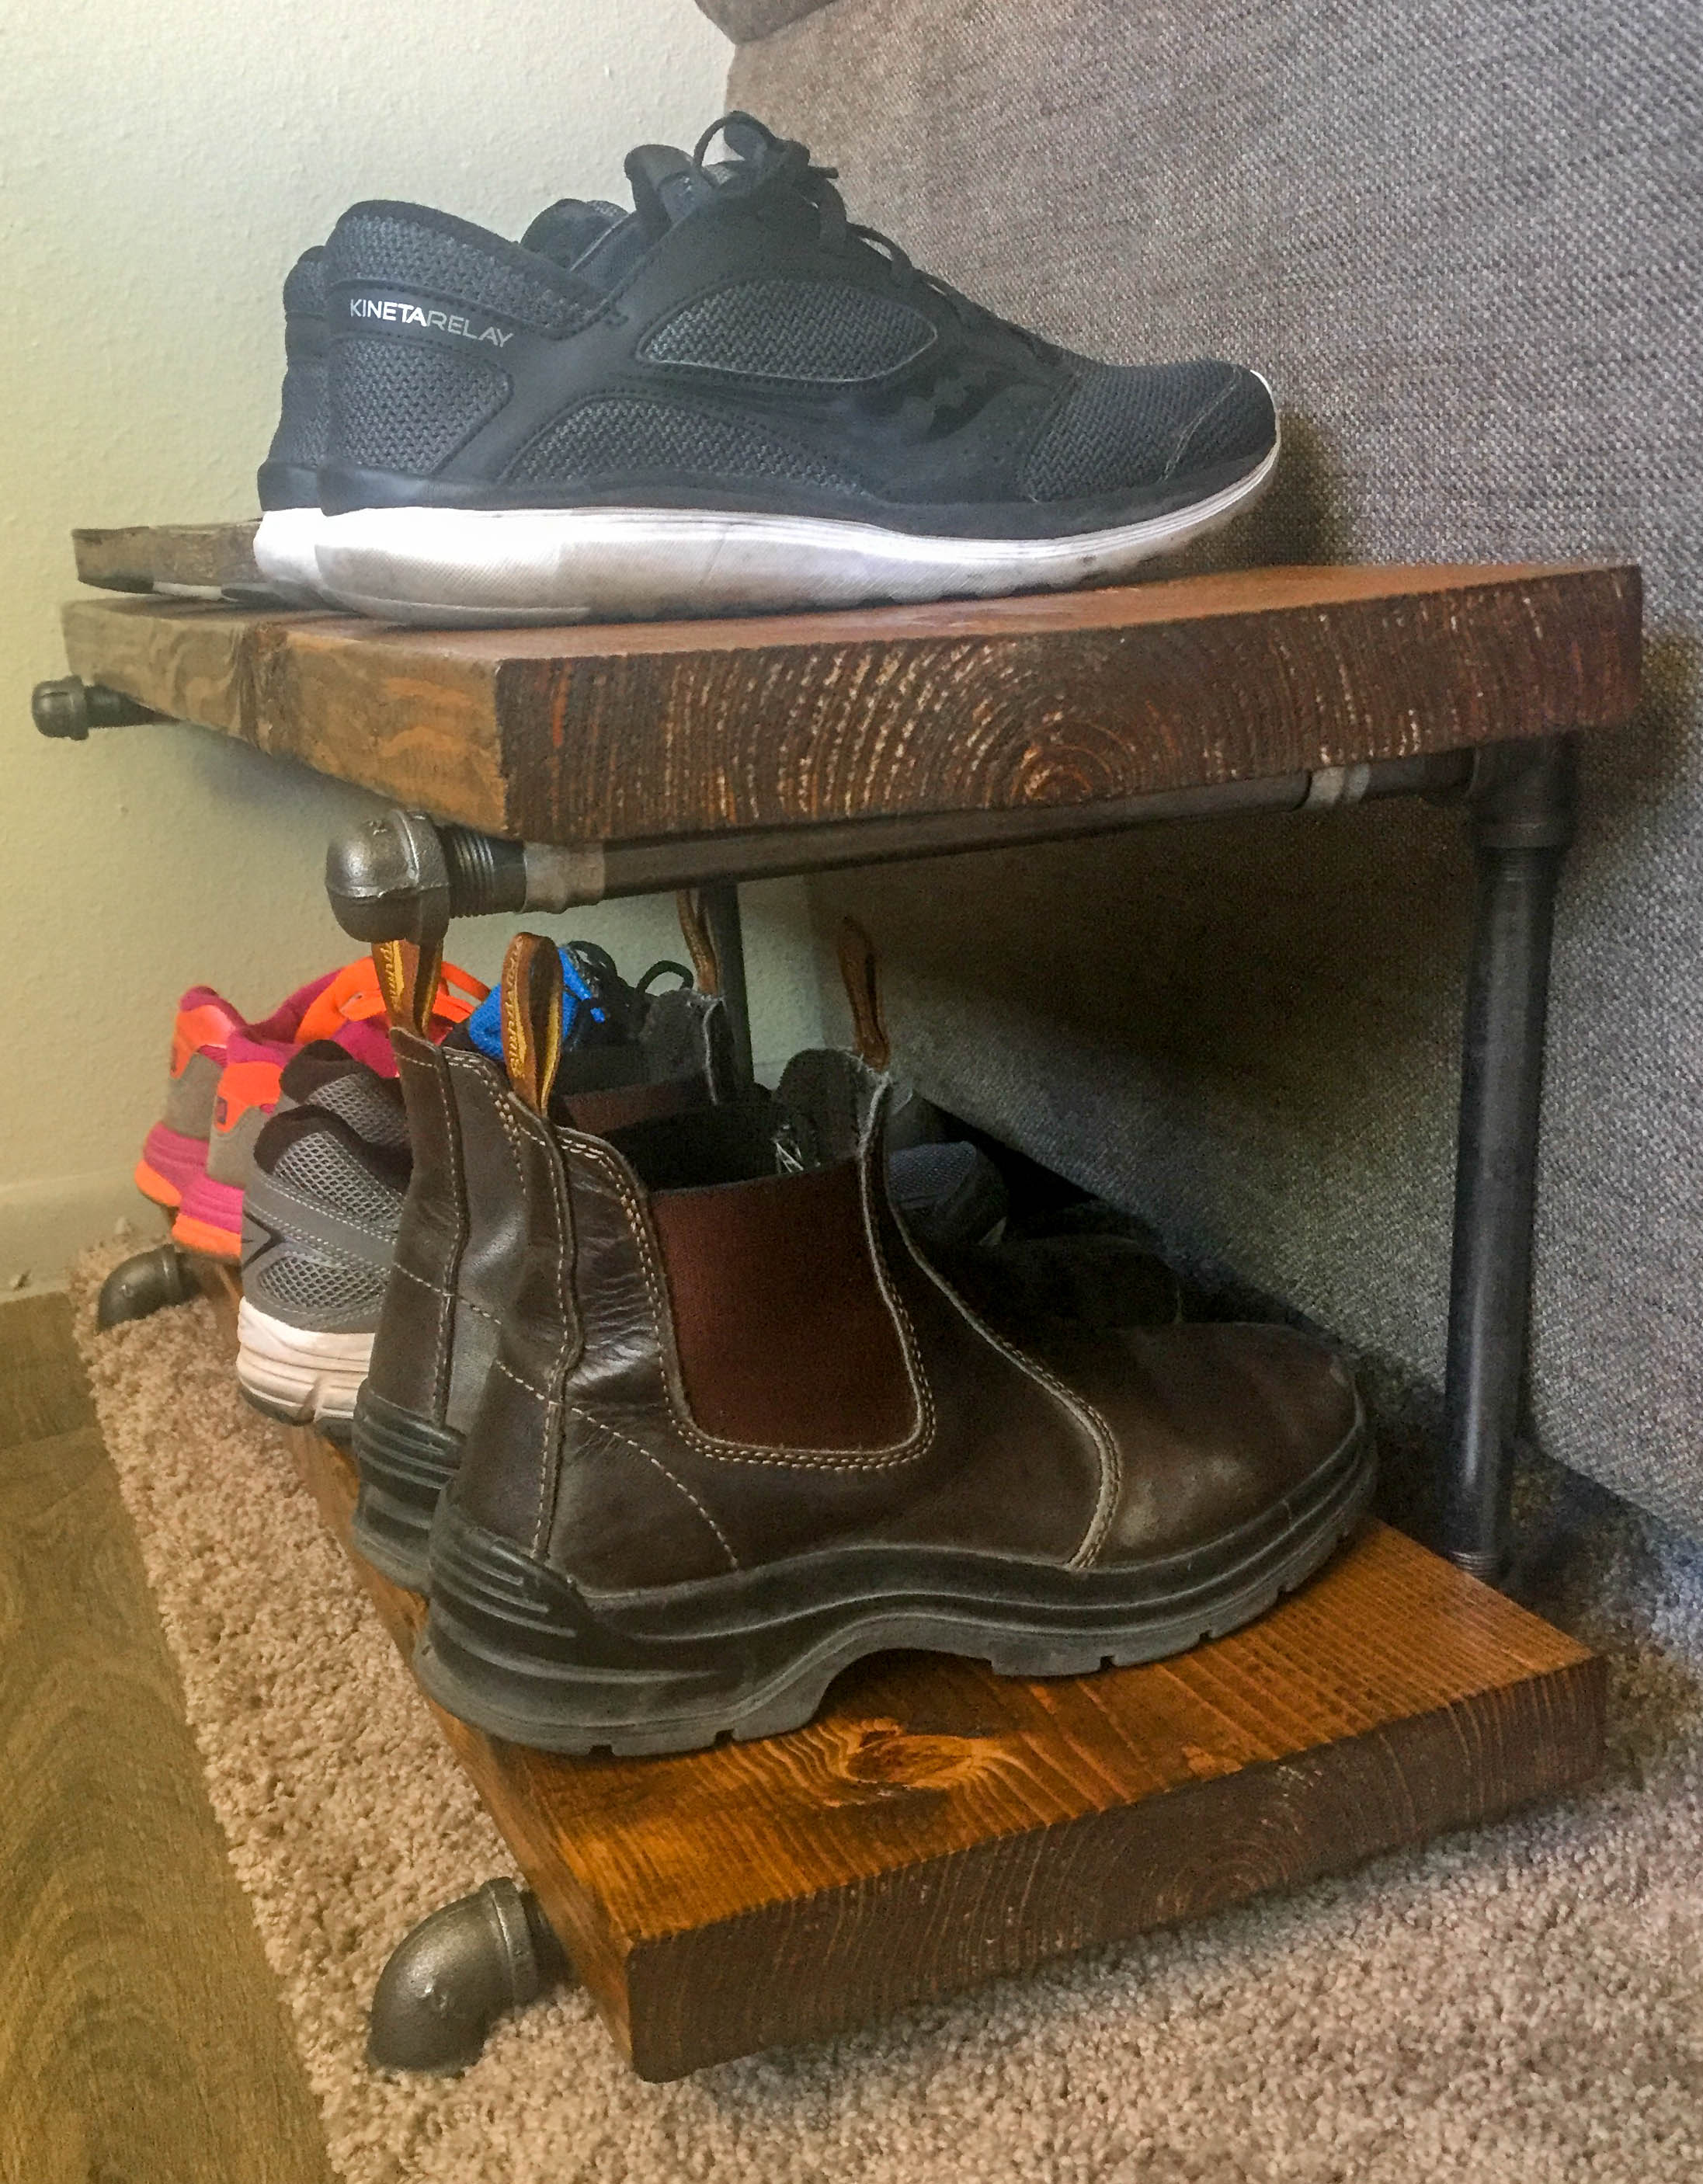 DIY-Shoe Stand